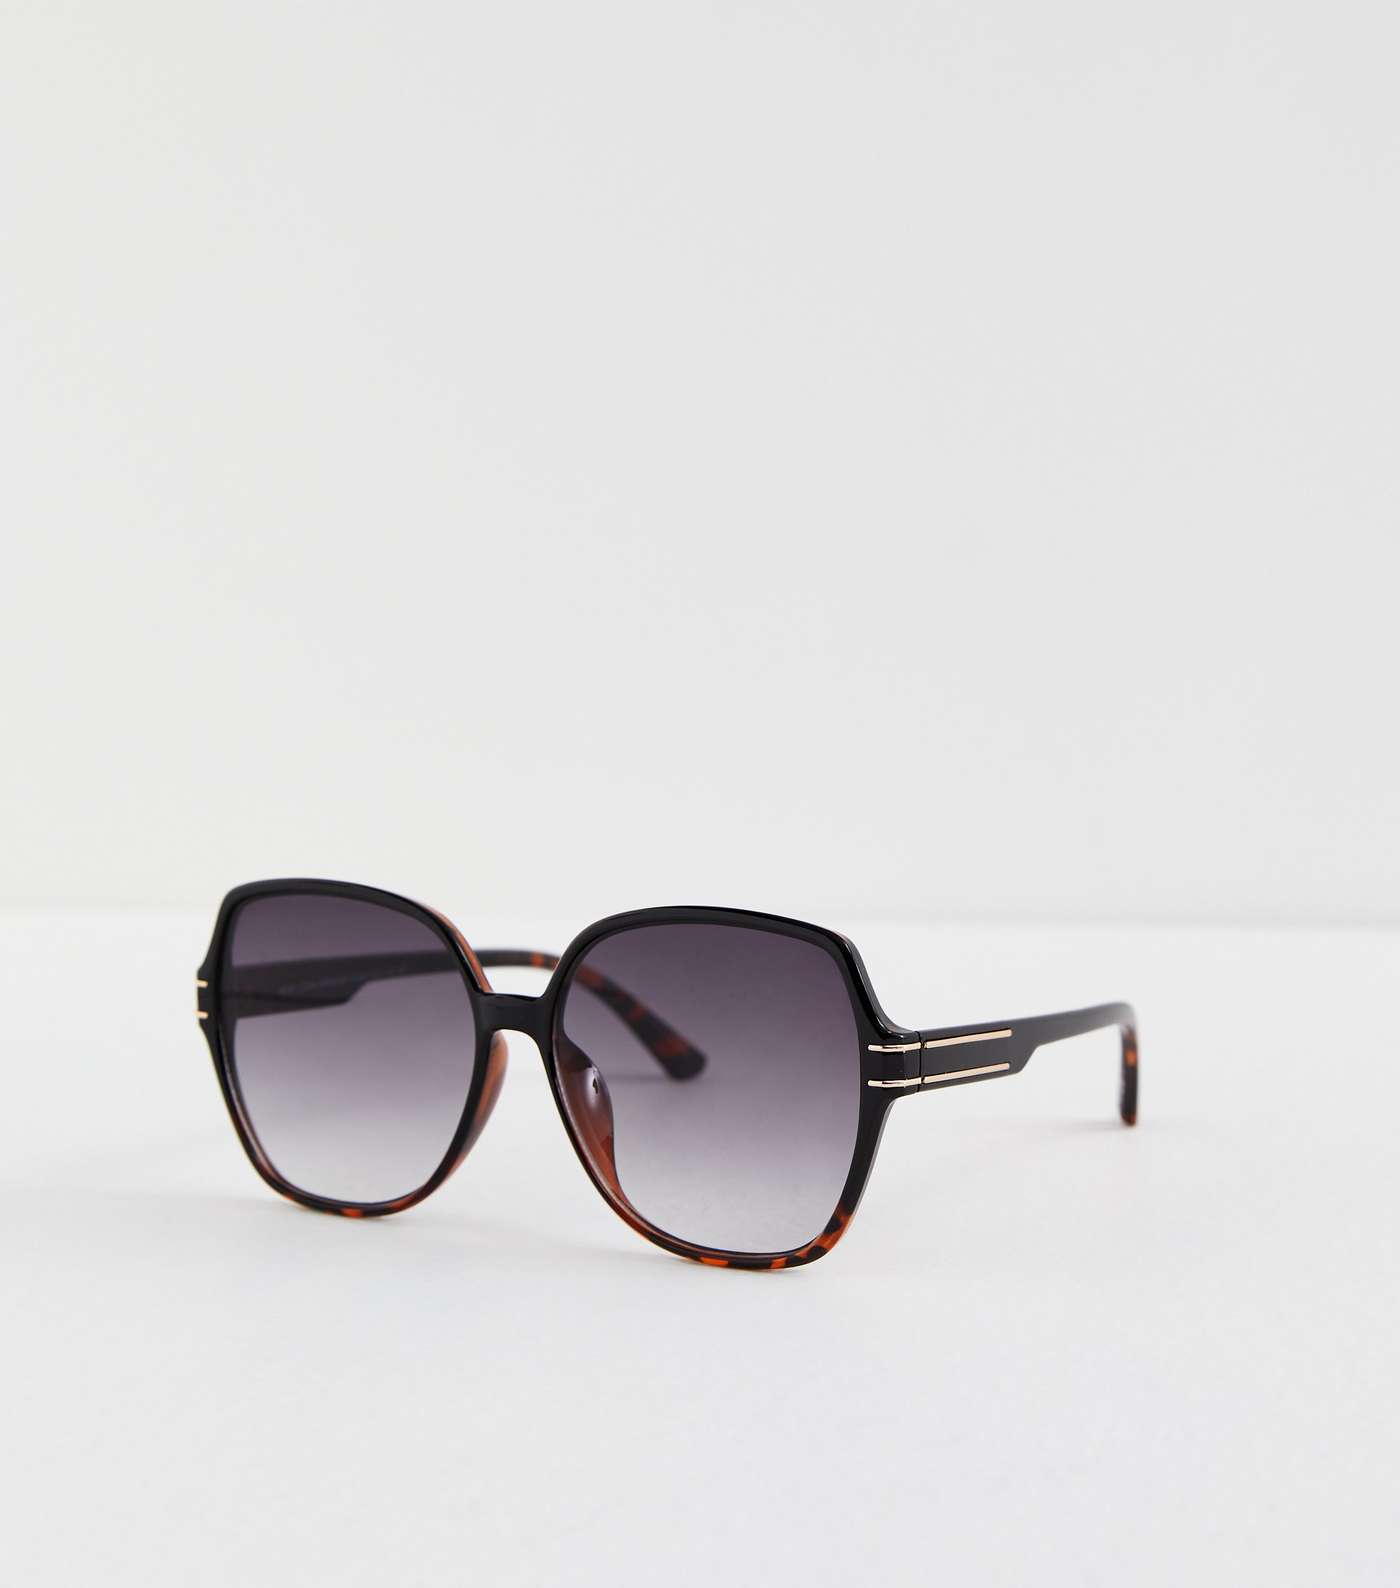 Black Tortoiseshell Effect Square Frame Sunglasses Image 2